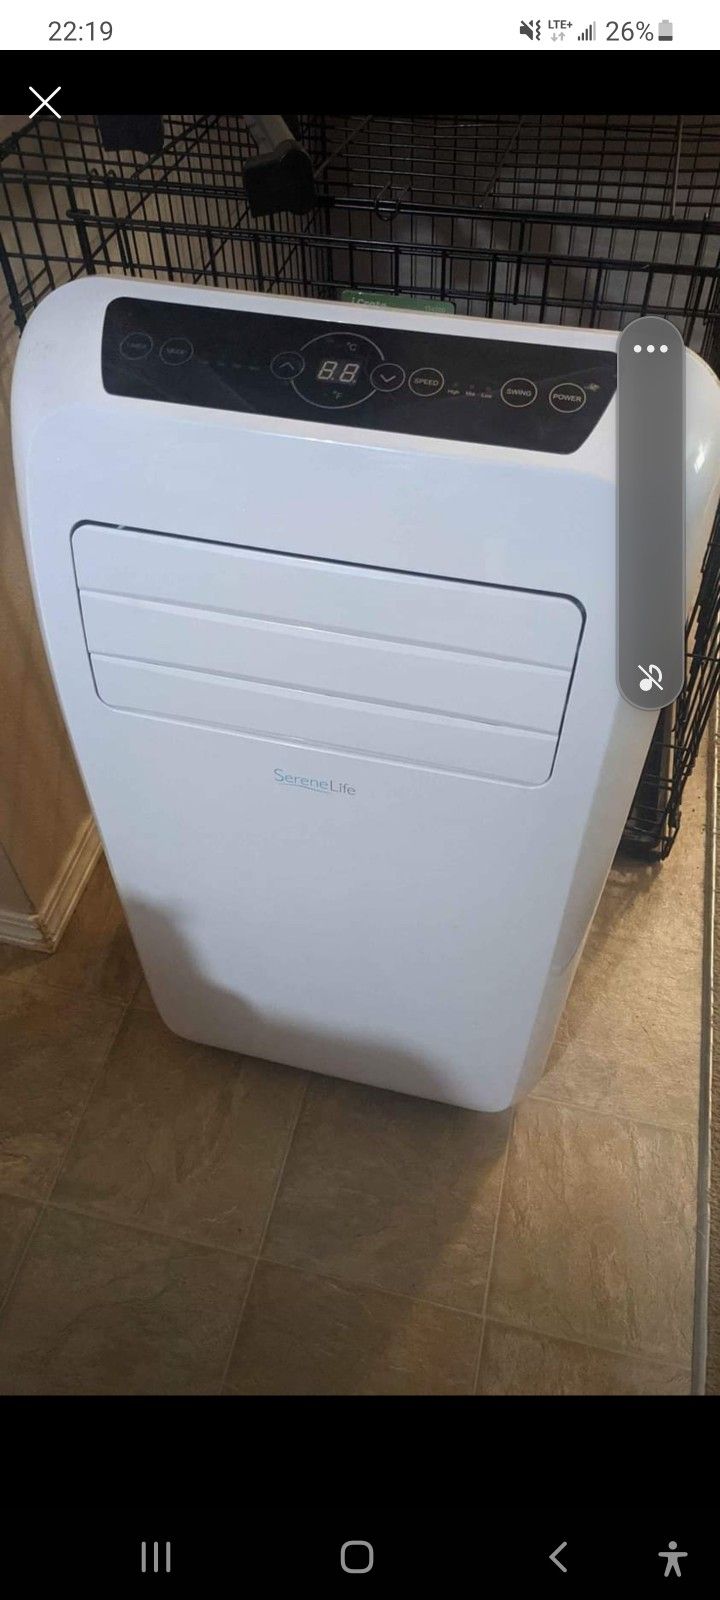 SereneLife SLPAC Portable Air Conditioner, 10,000 BTU + HEAT, White